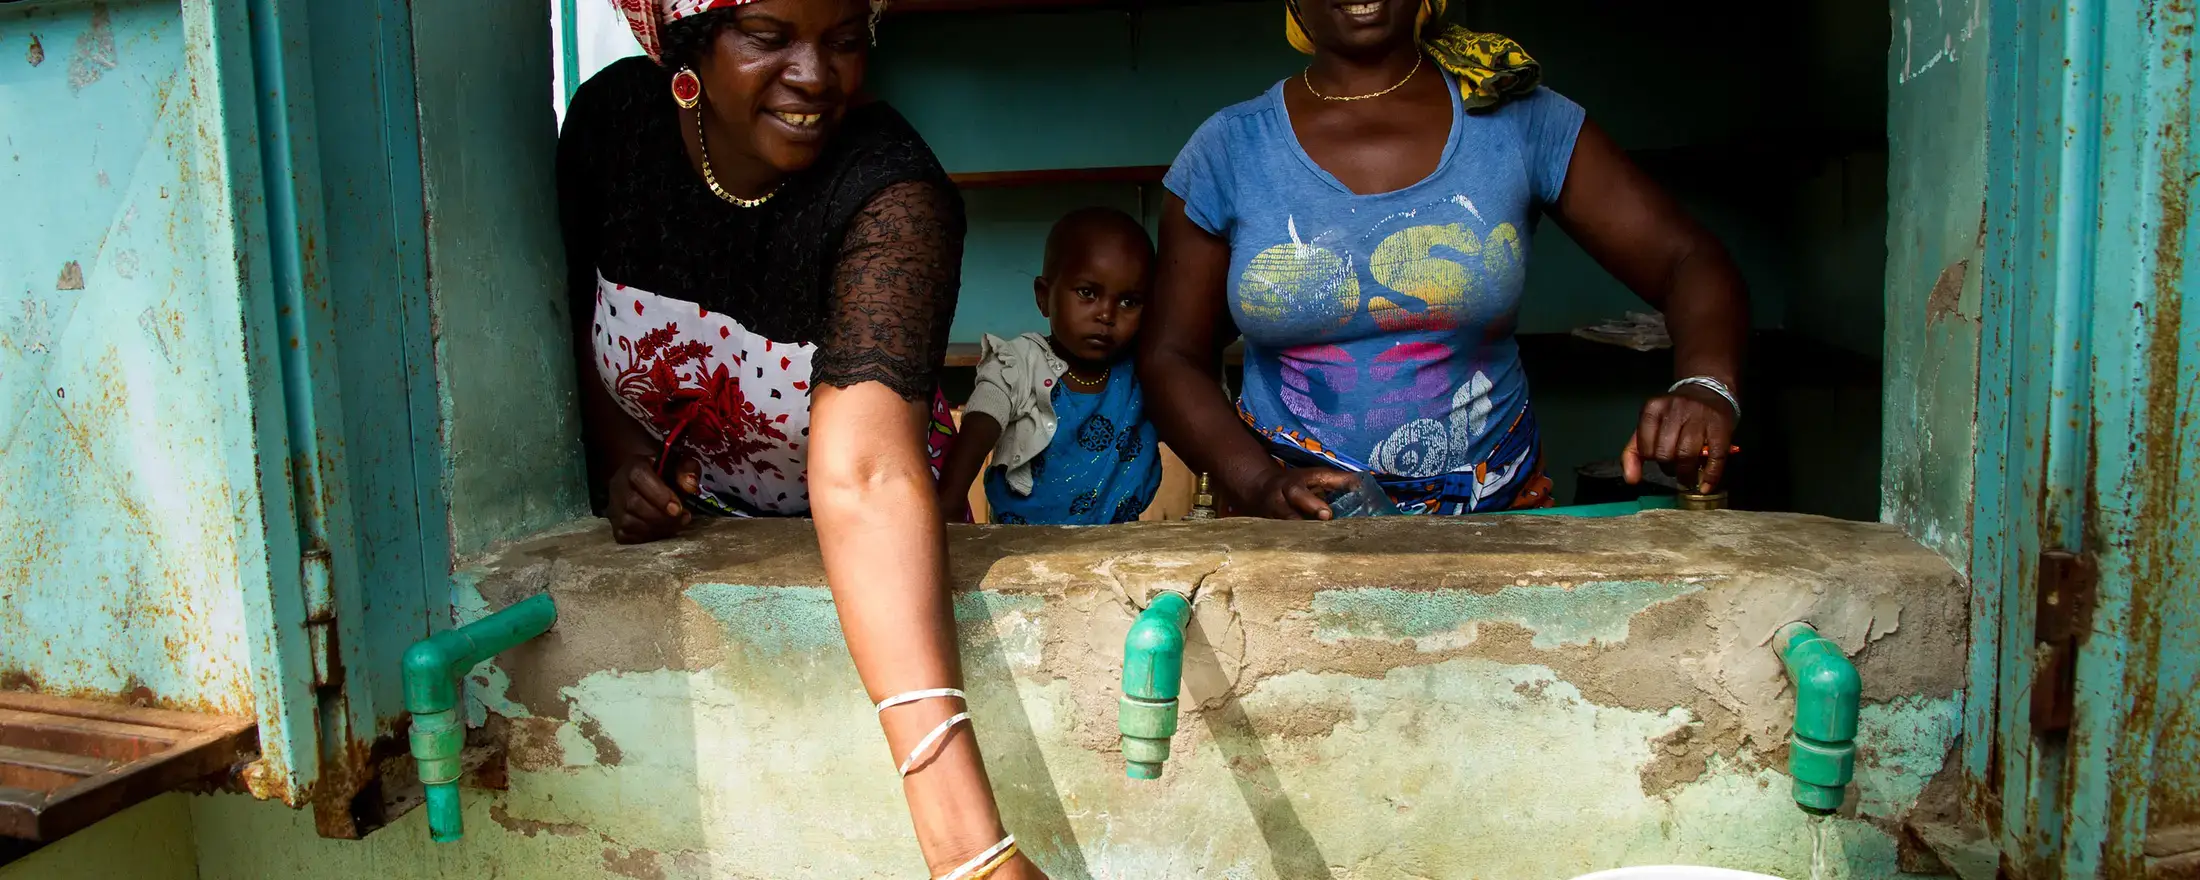 Residents in an informal settlement in Kenya’s coastal Mtwapa area at a water kiosk